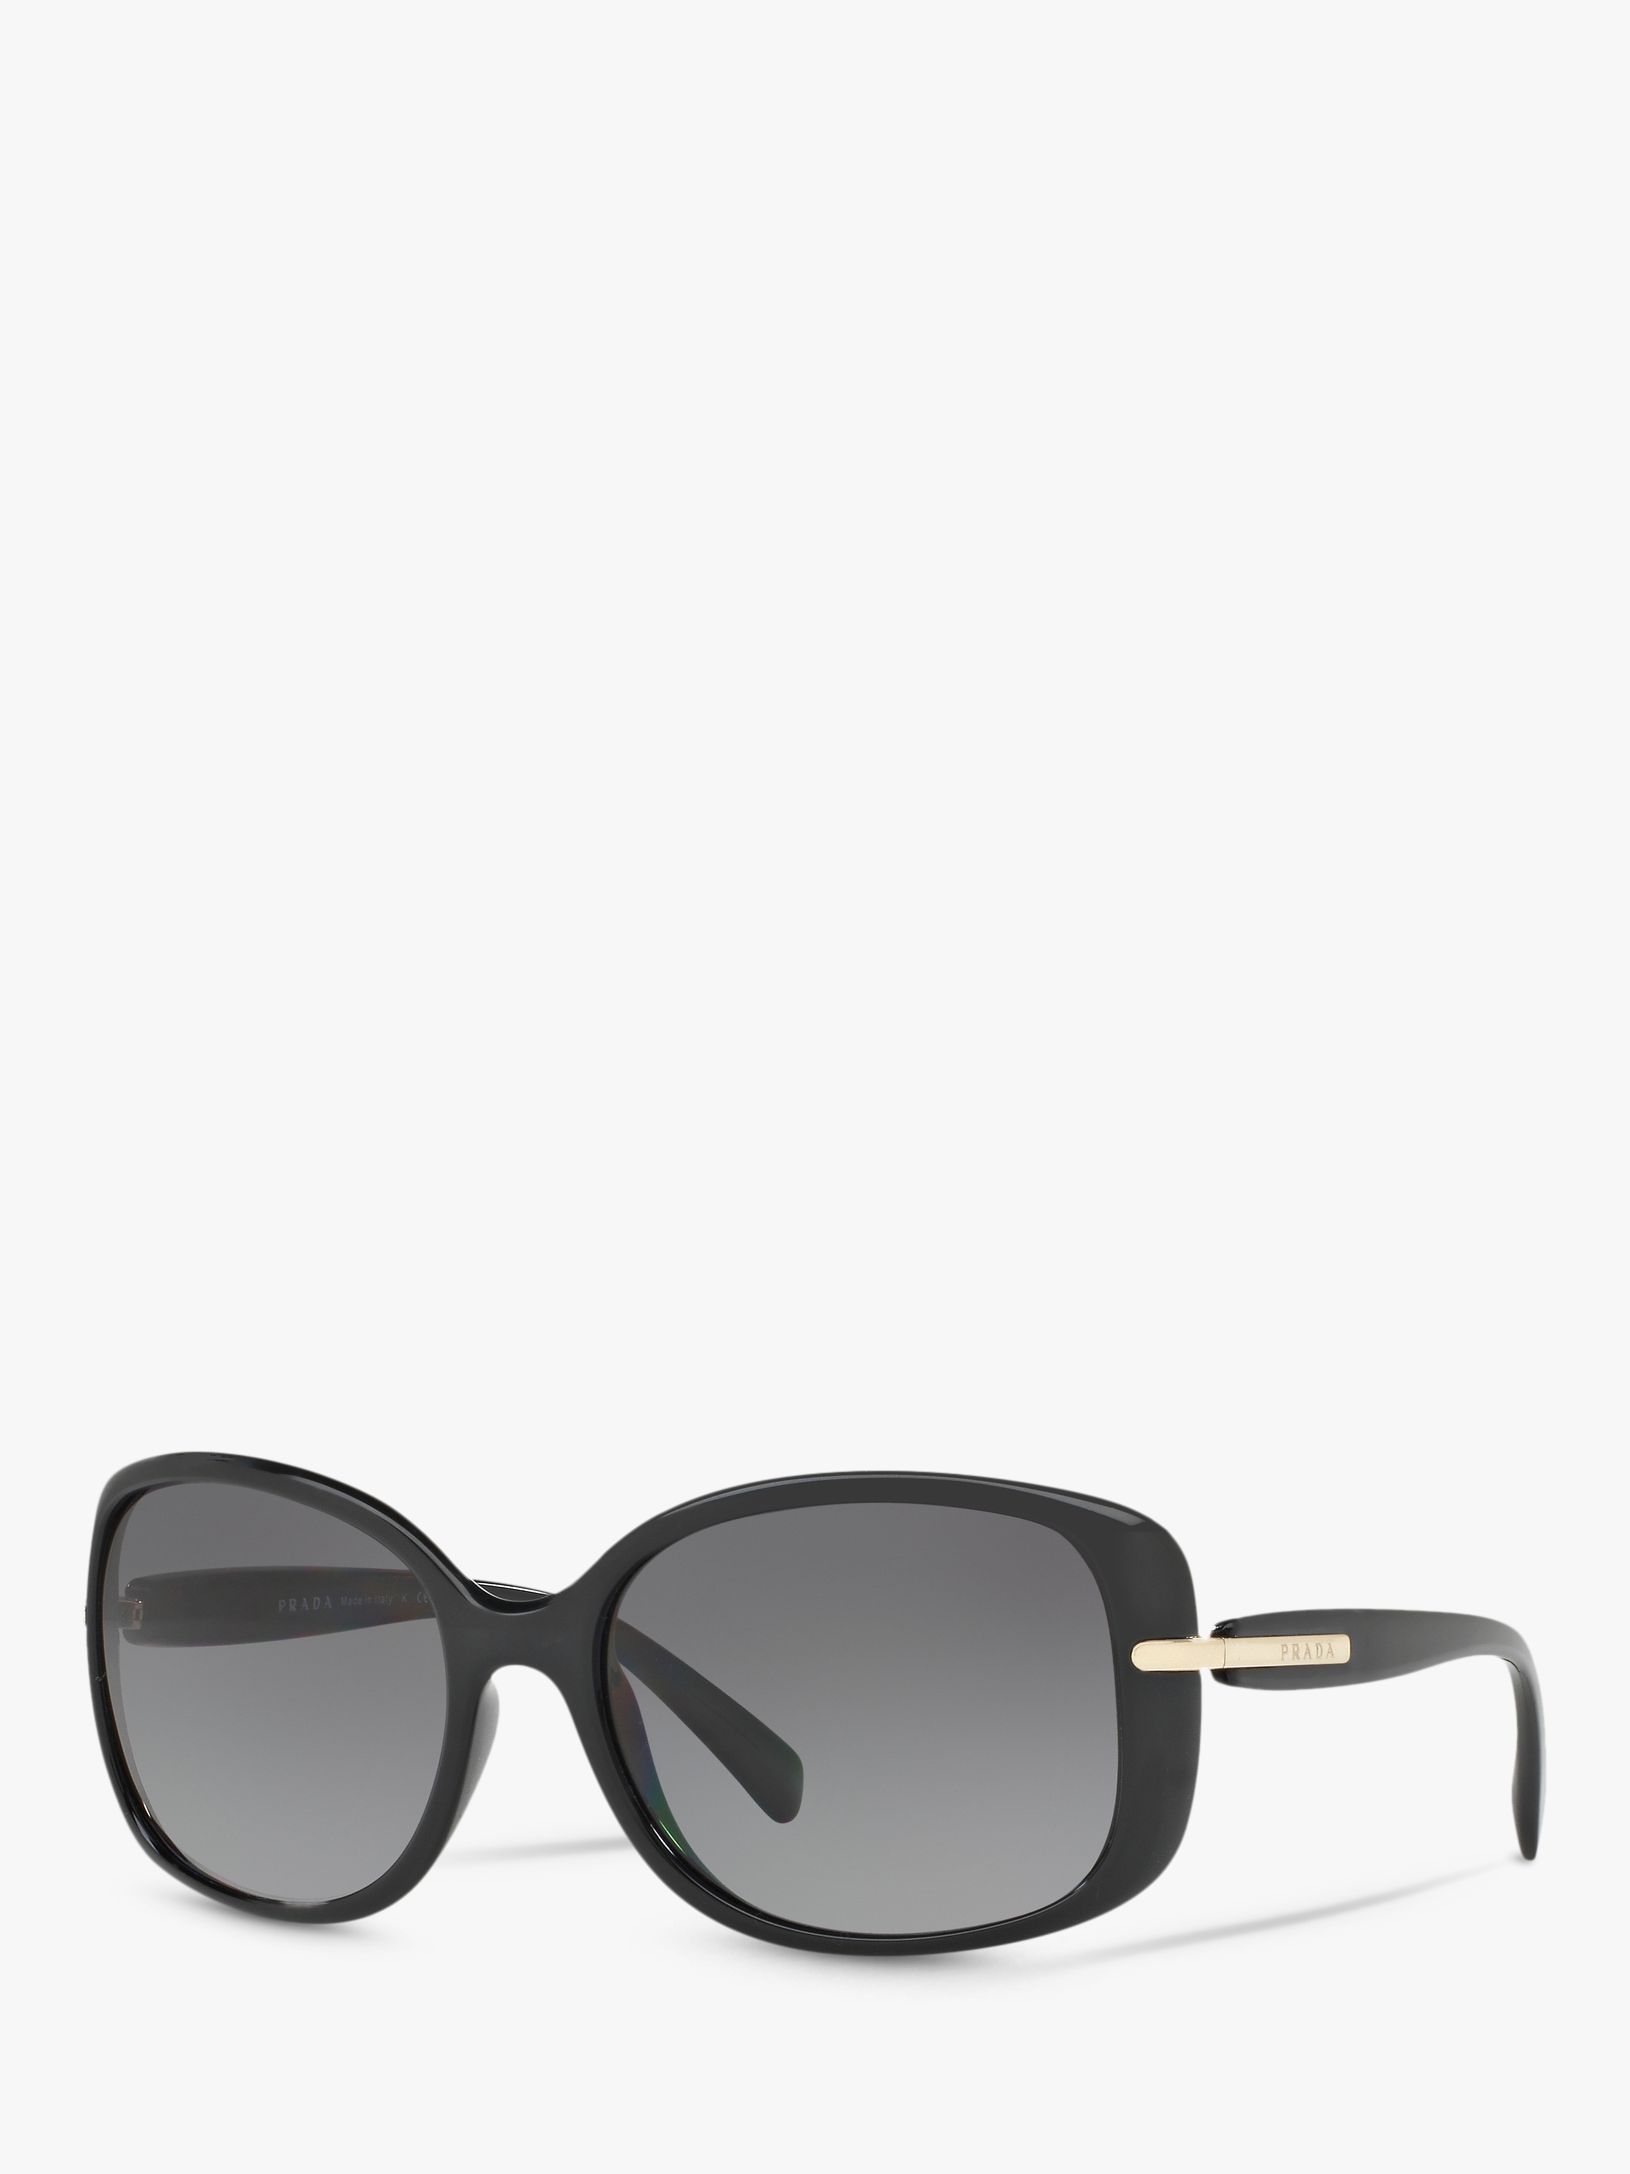 Prada PR 08OS Women's Polarised Rectangular Sunglasses, Black/Grey Gradient at John Lewis & Partners